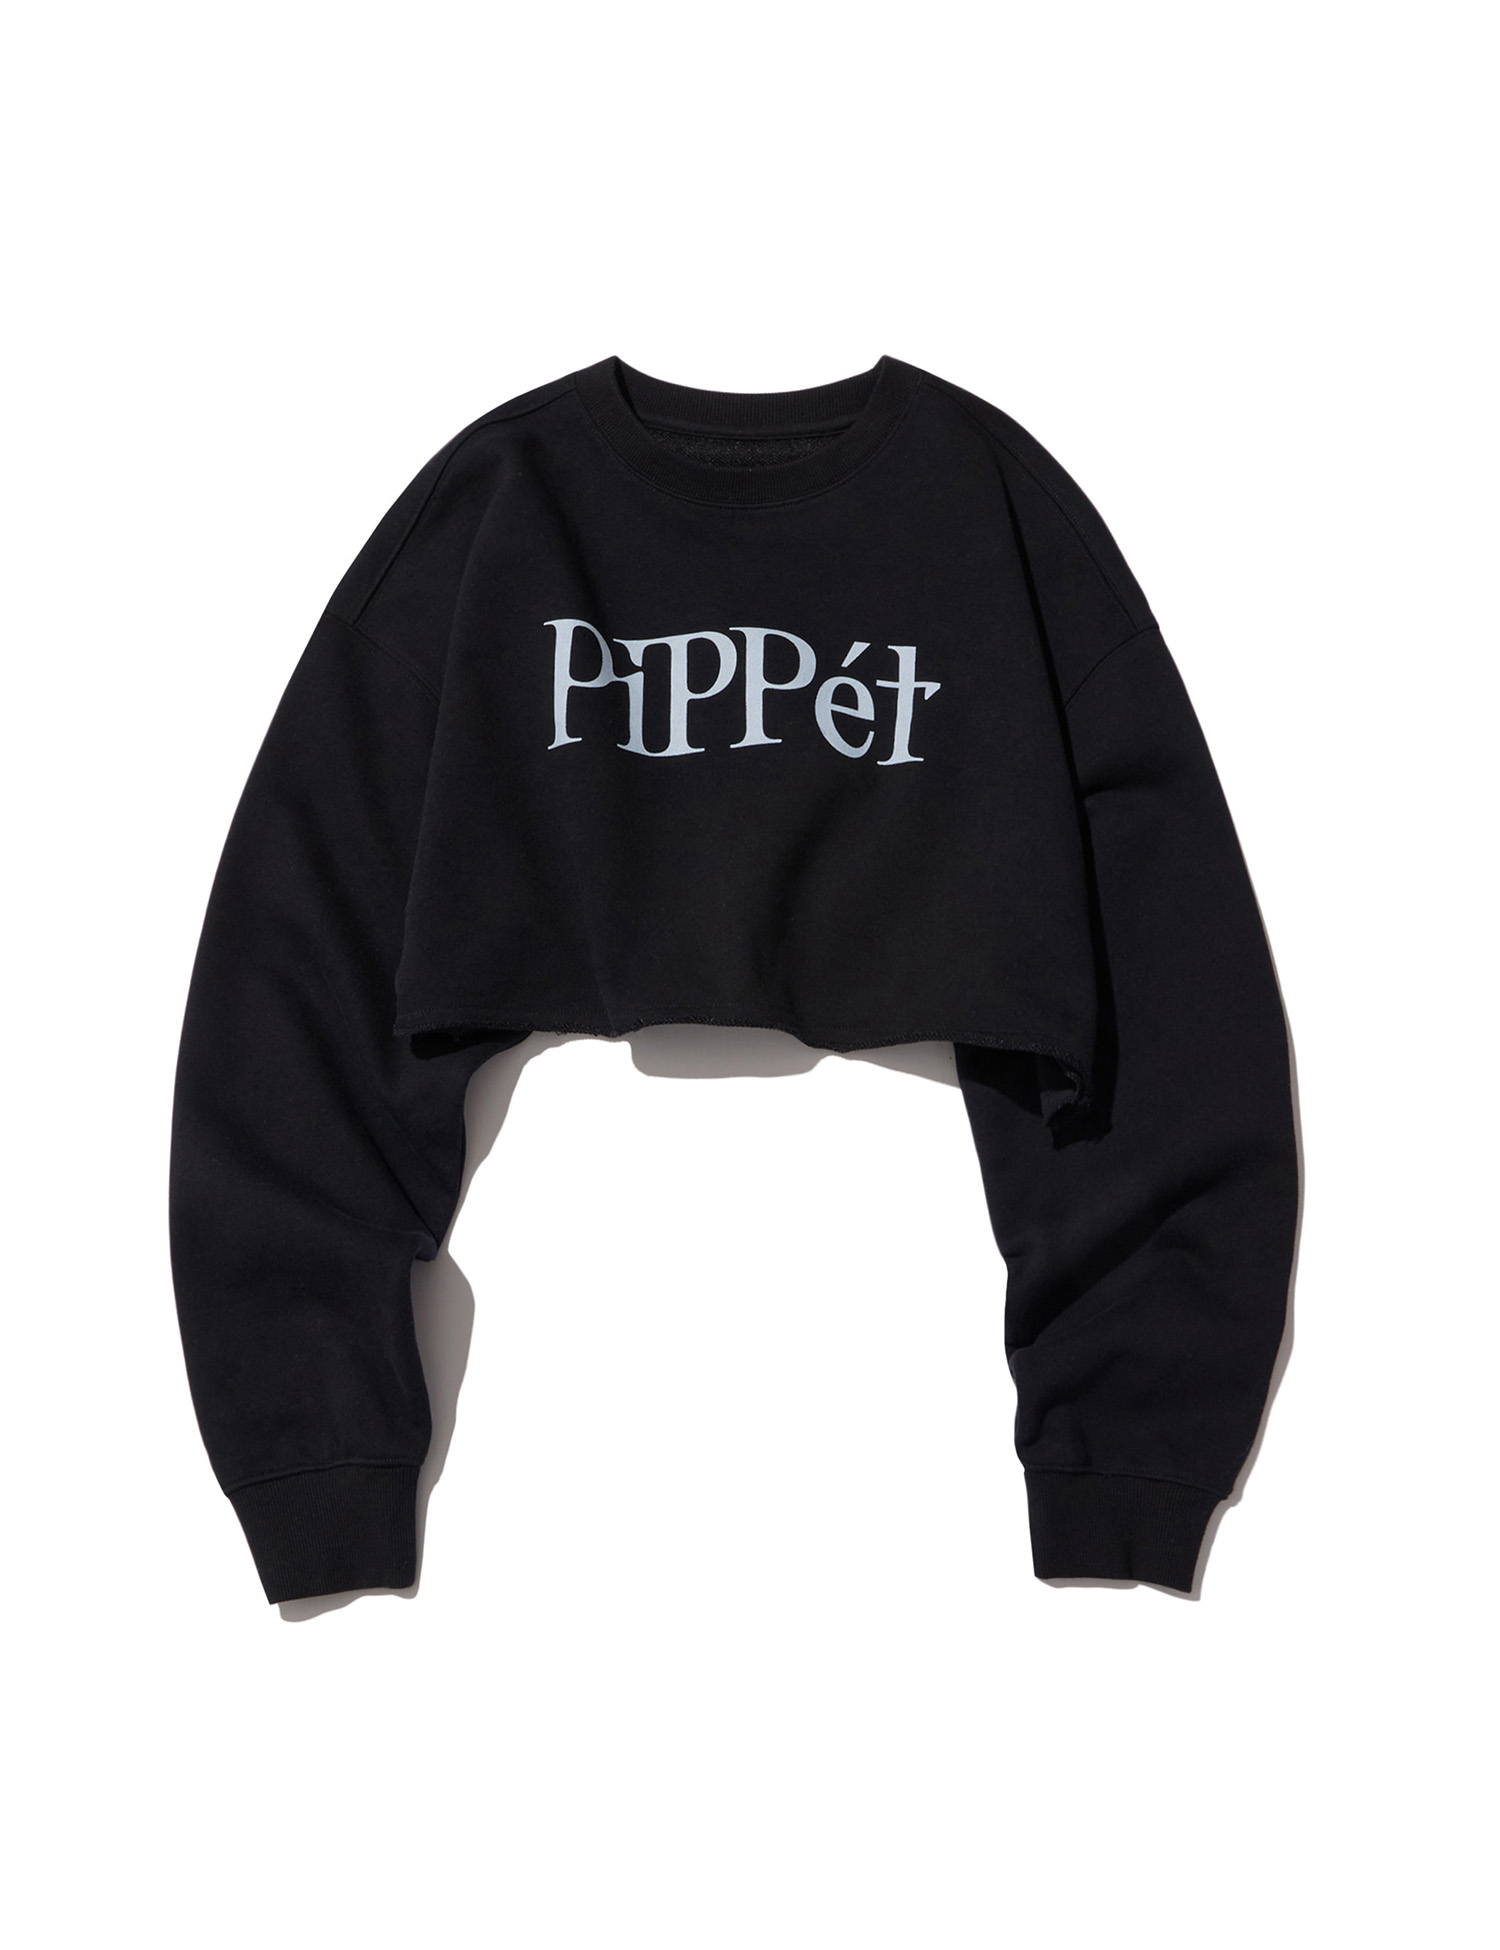 Pippet Crop Sweatshirt (black)